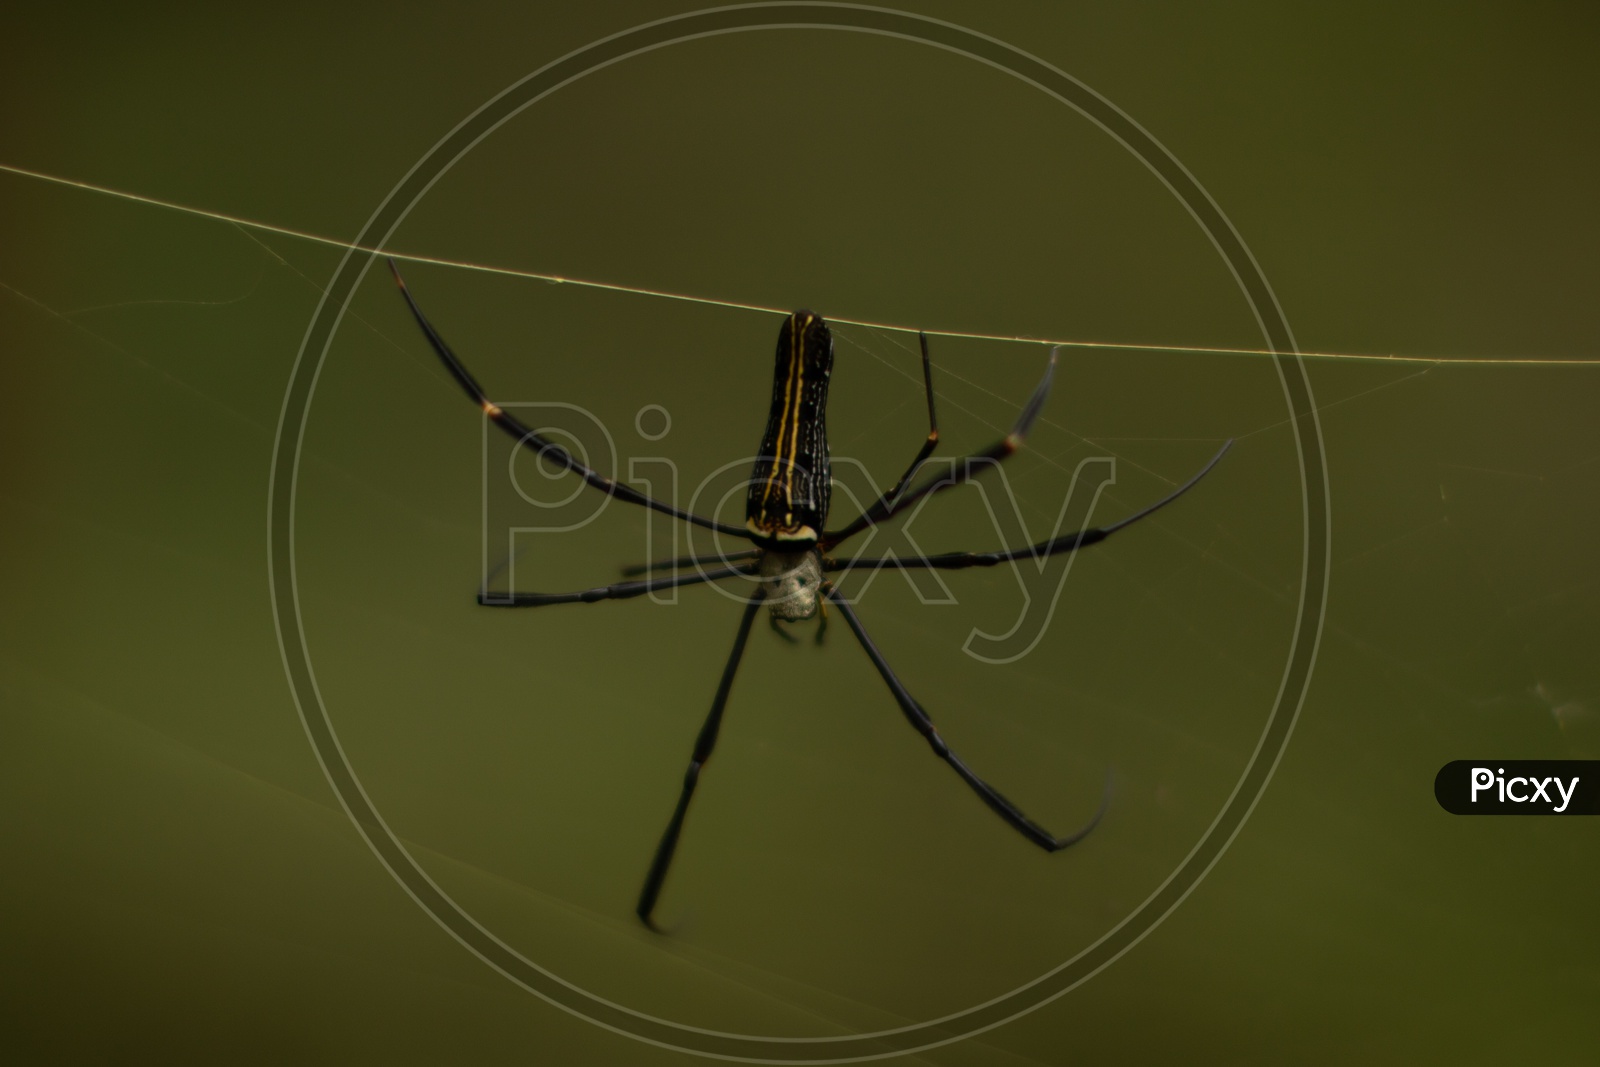 A Black Spider on its Web Closeup Shot